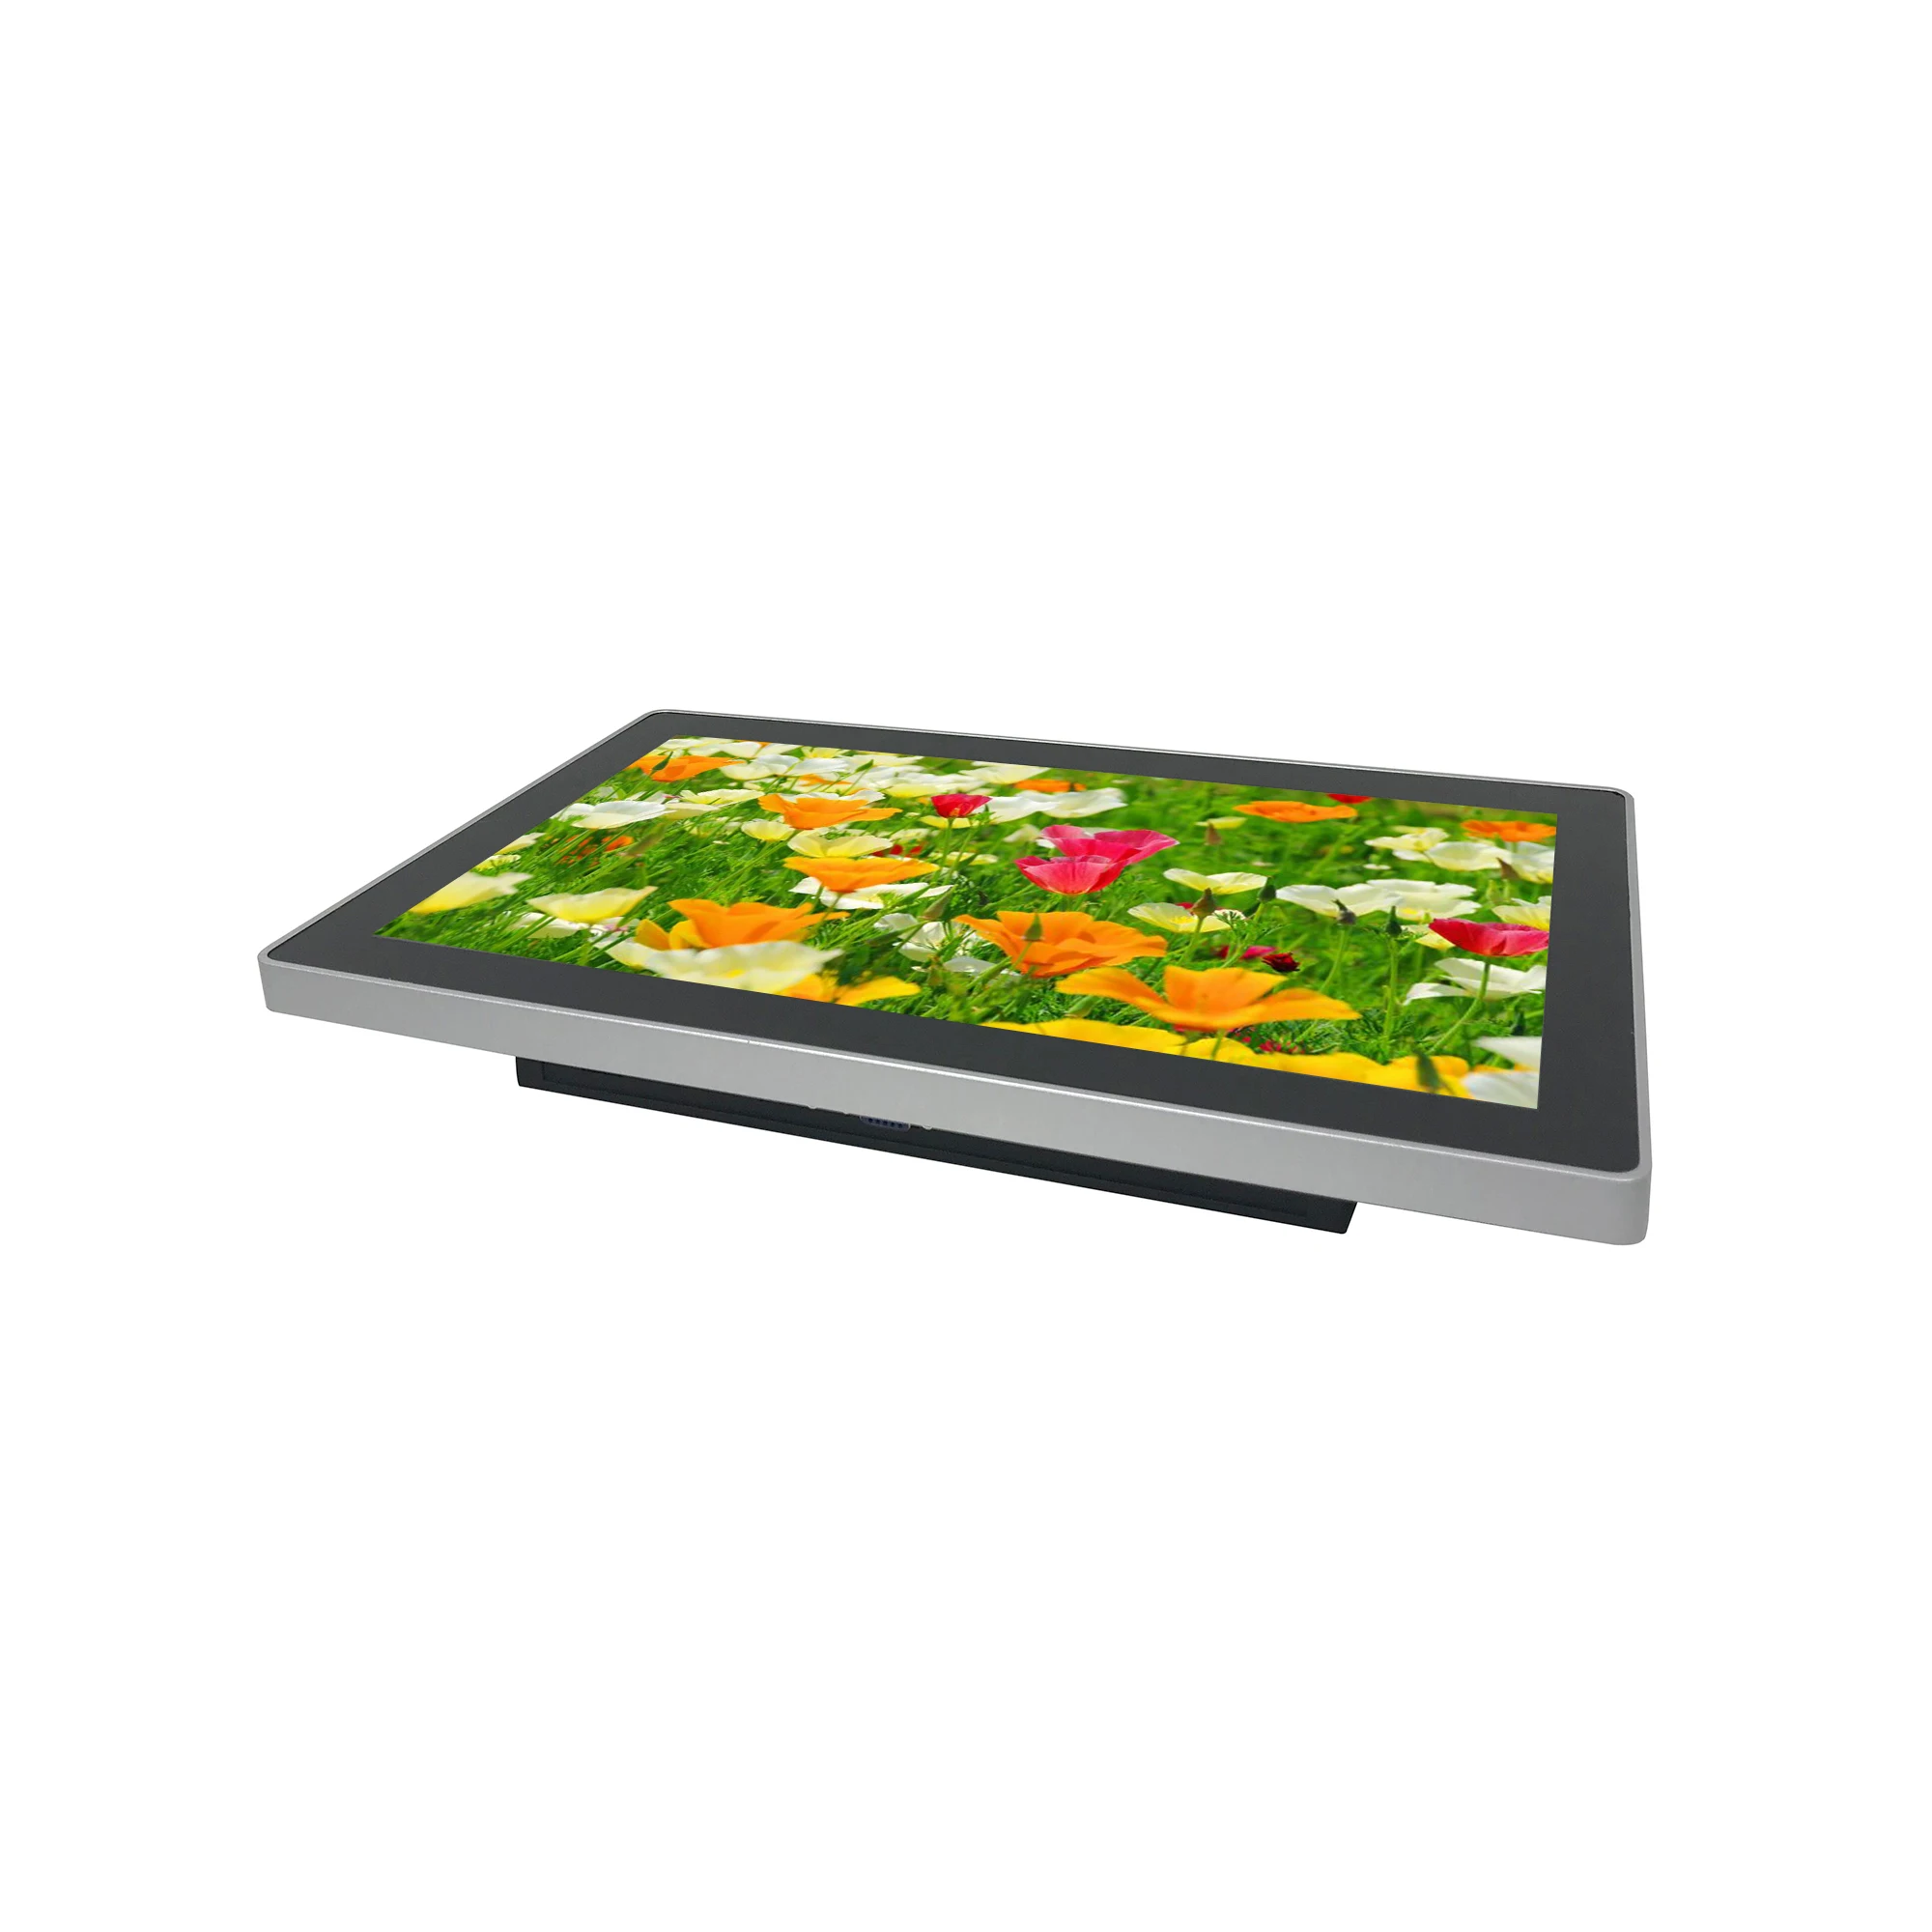 

18.5 Inch Capacitive Touchscreen LED LCD Monitor w/ HD VGA DVI Inputs